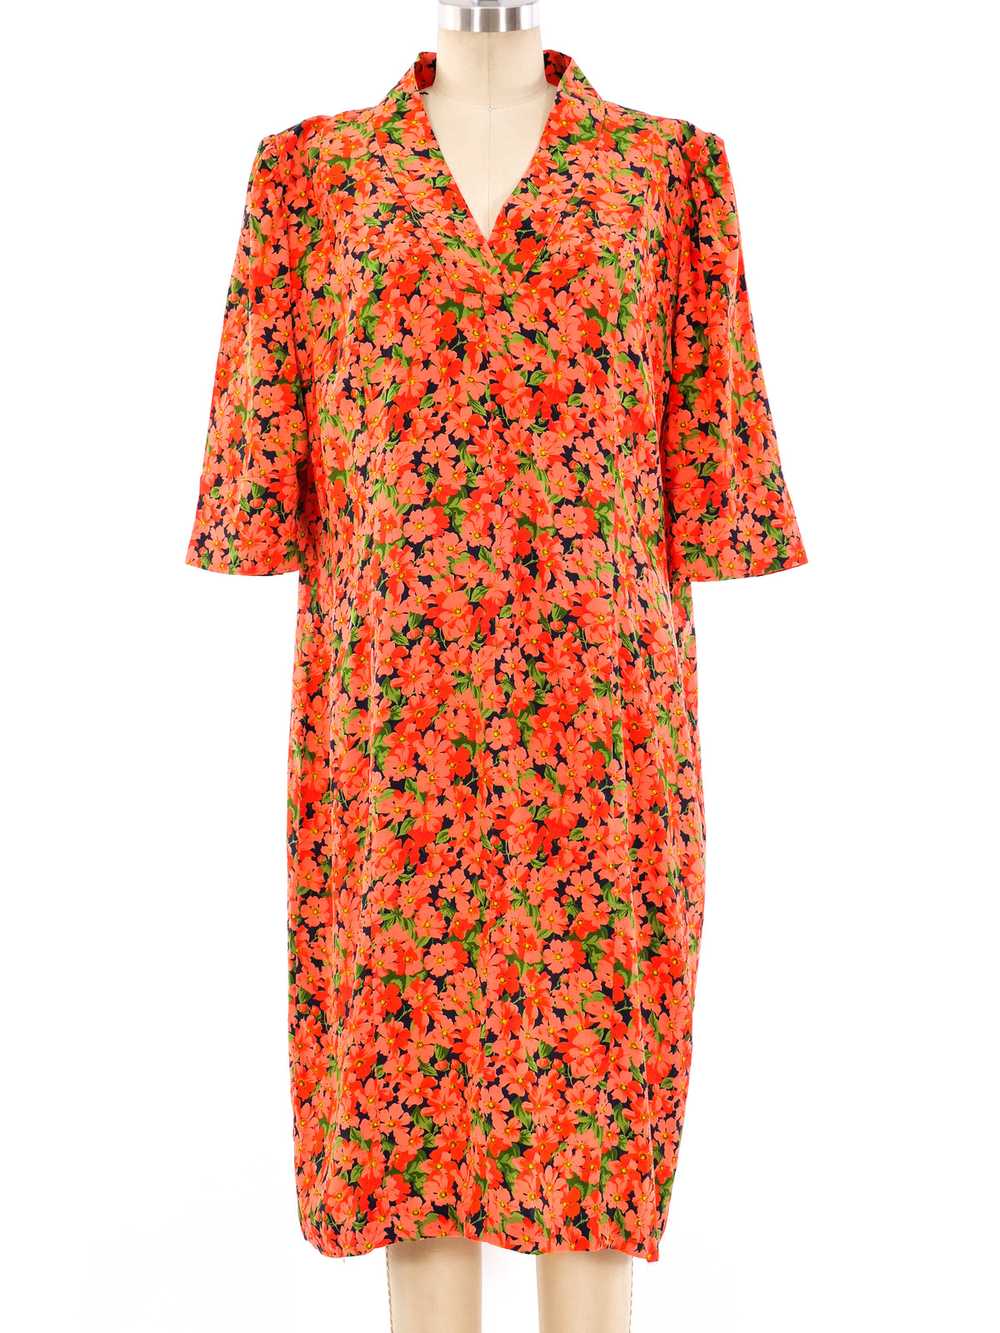 Yves Saint Laurent Floral Silk Dress - image 1